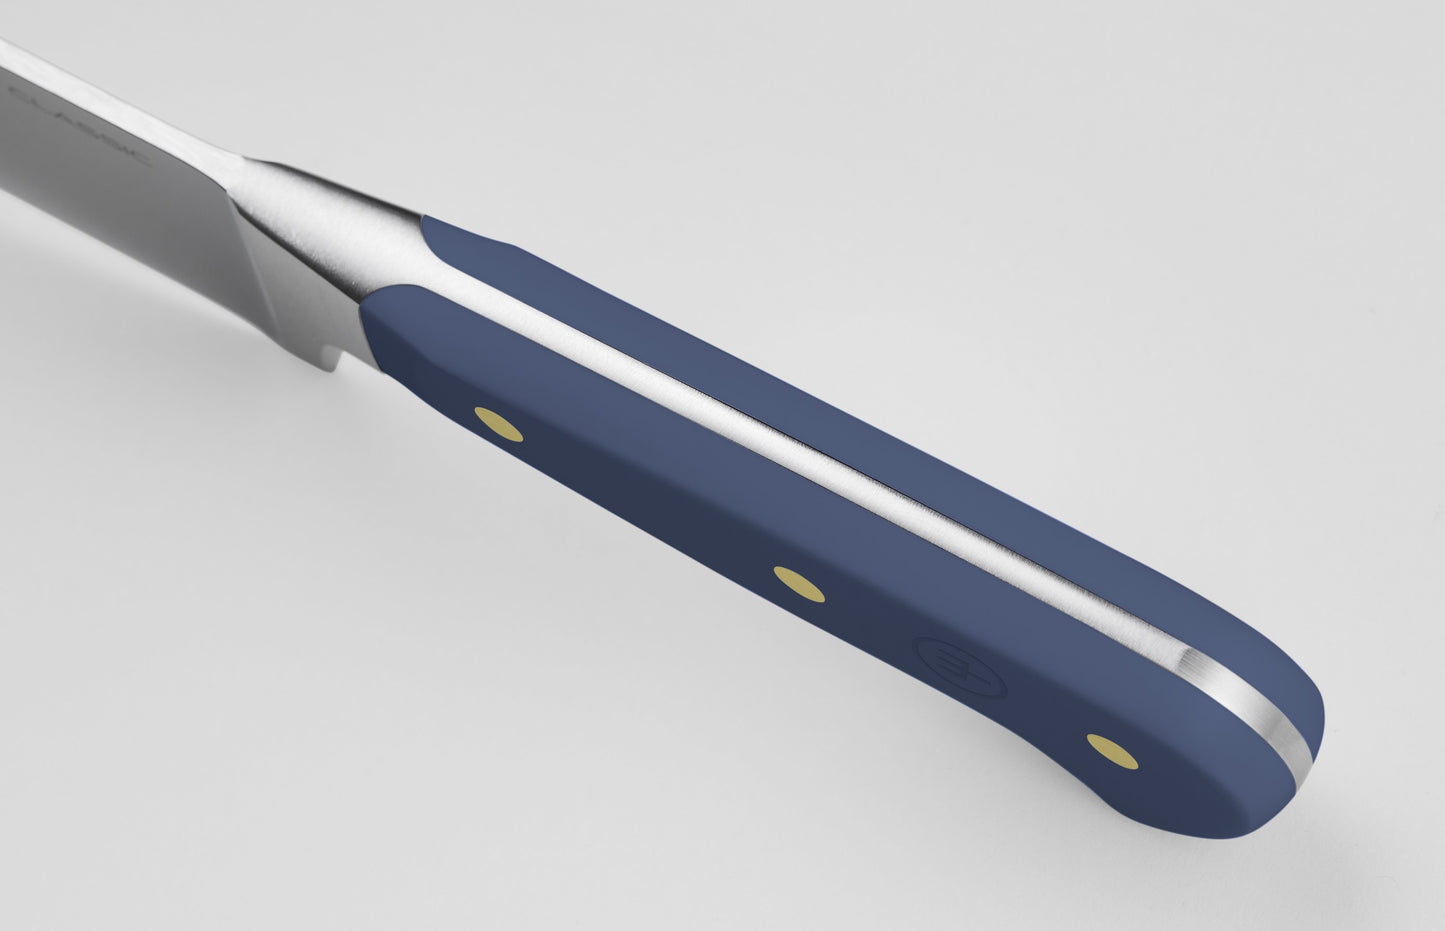 Classic Serrated Utility Knife 14 cm | 5 inch